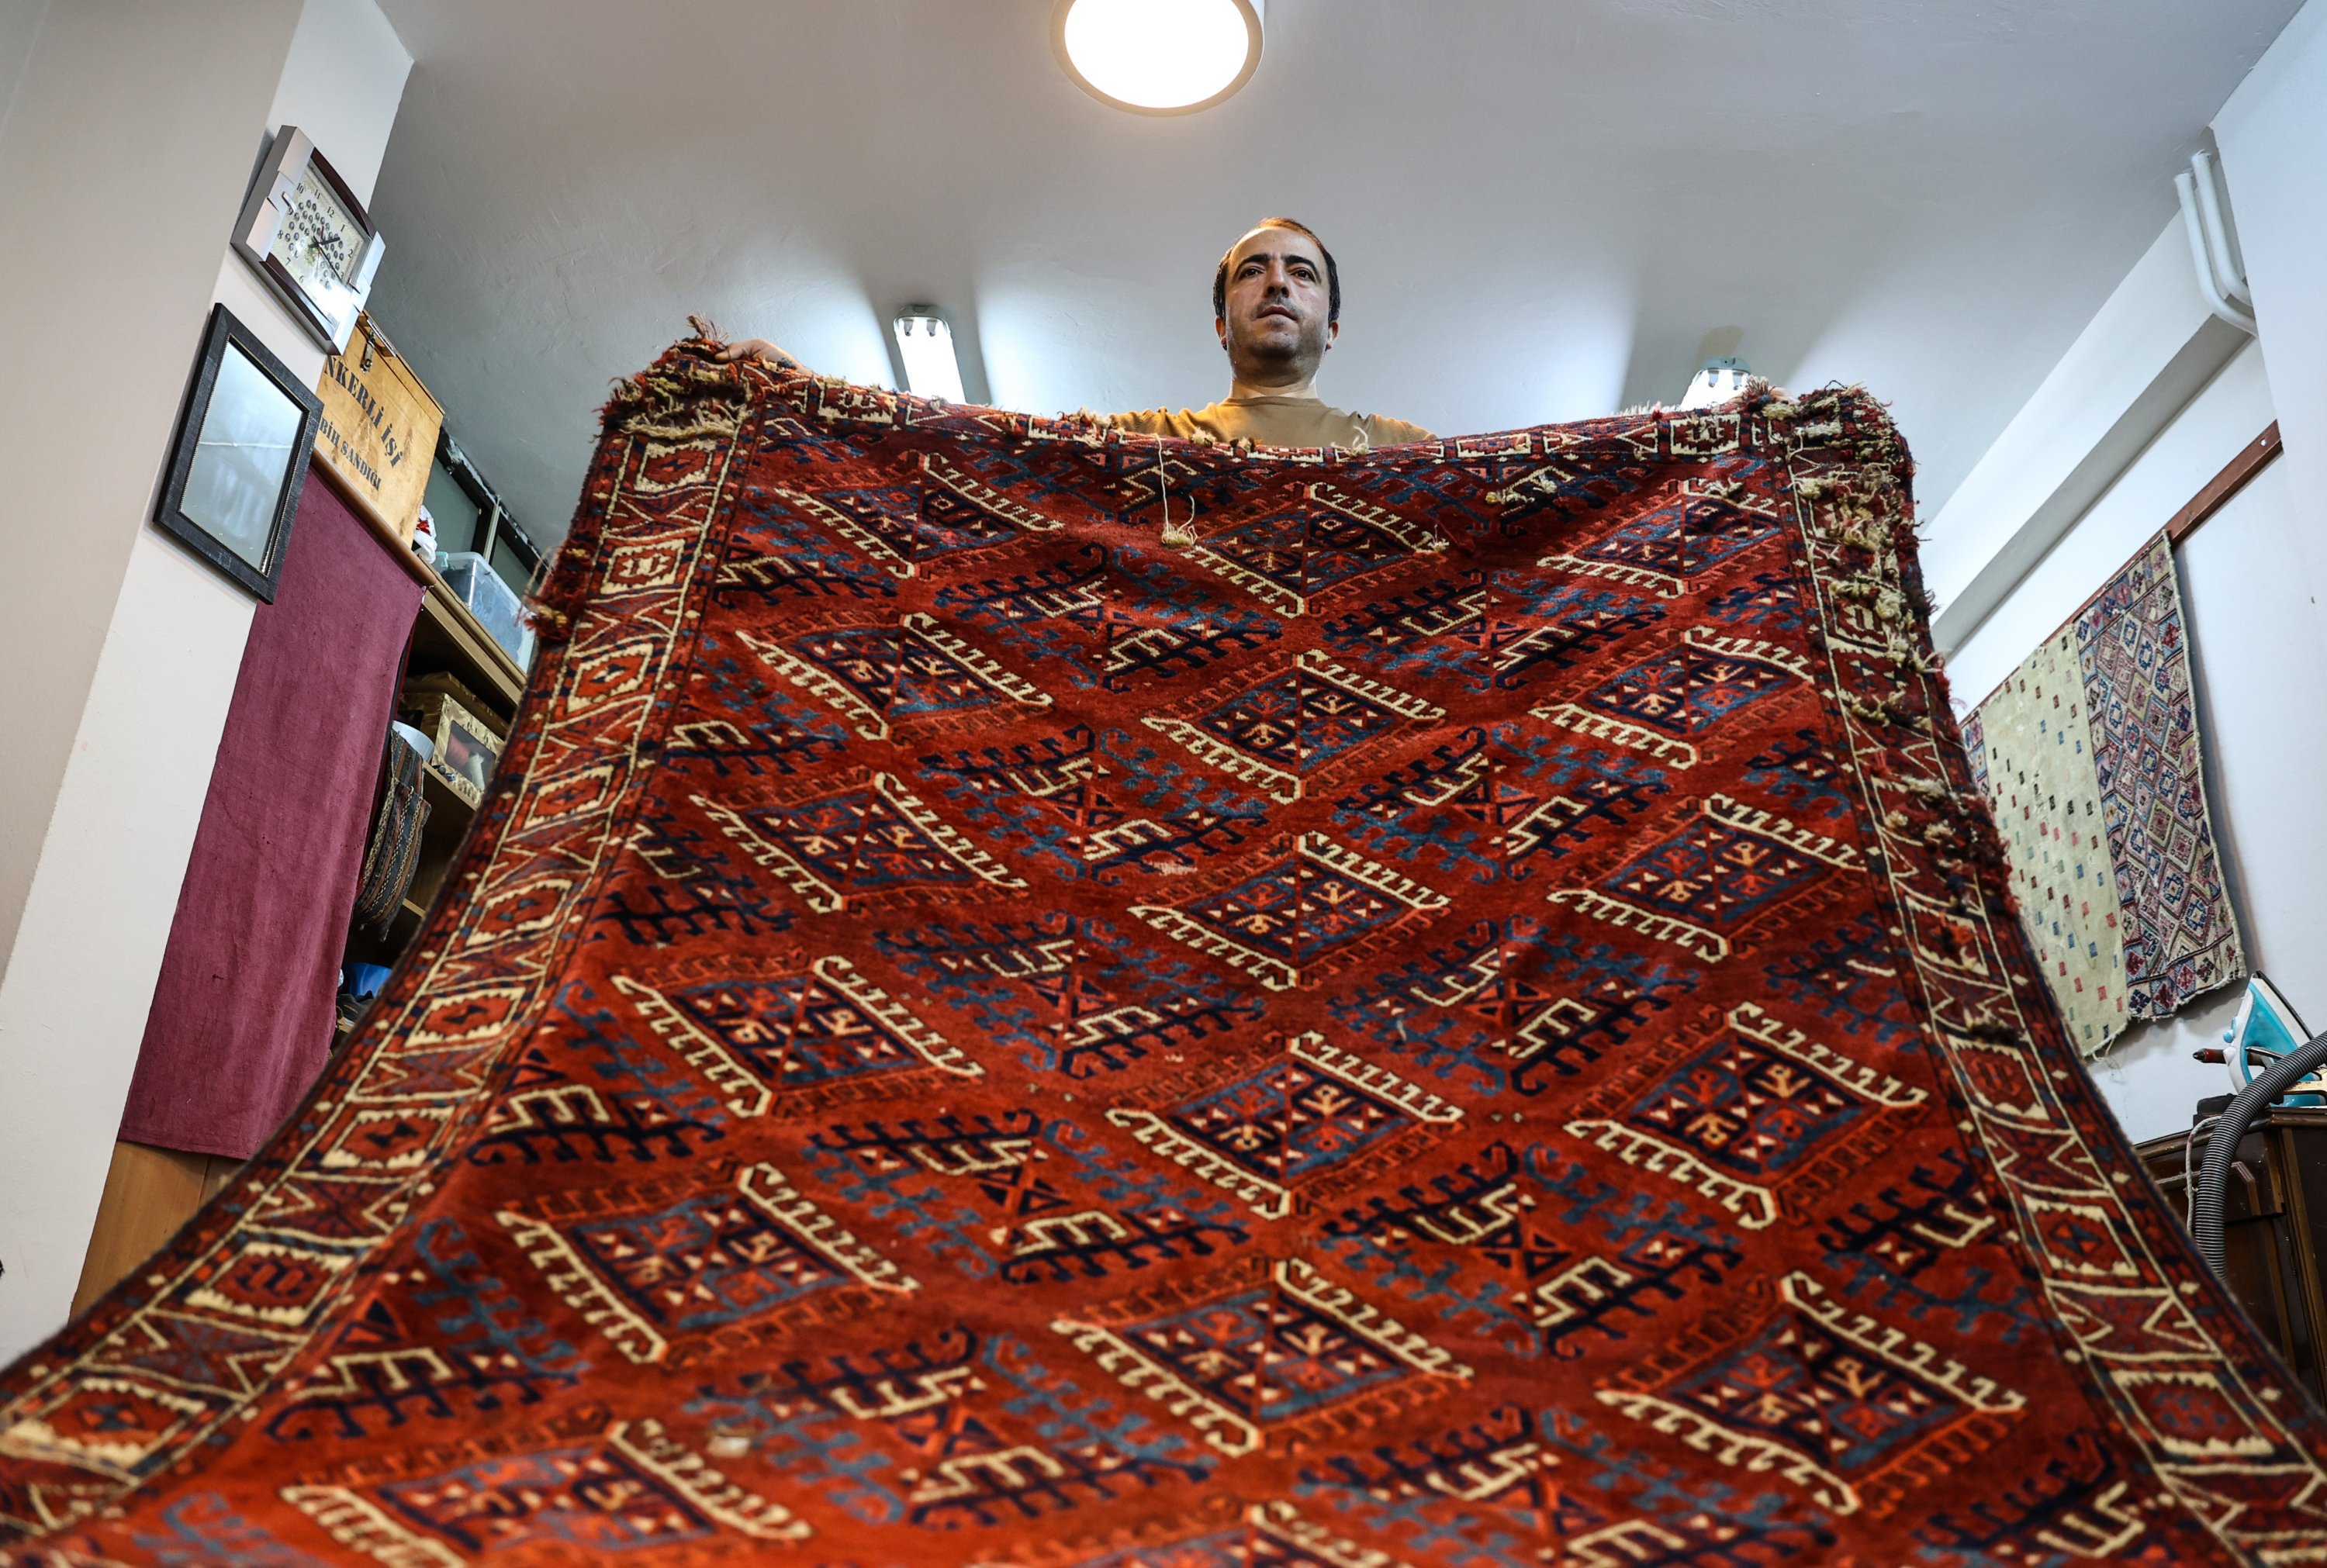 Ramazan Yumuşak holds up a traditional carpet at his workshop in Babıali Carpetmakers Bazaar, Istanbul, Turkey, Jan. 10, 2021. (AA Photo)